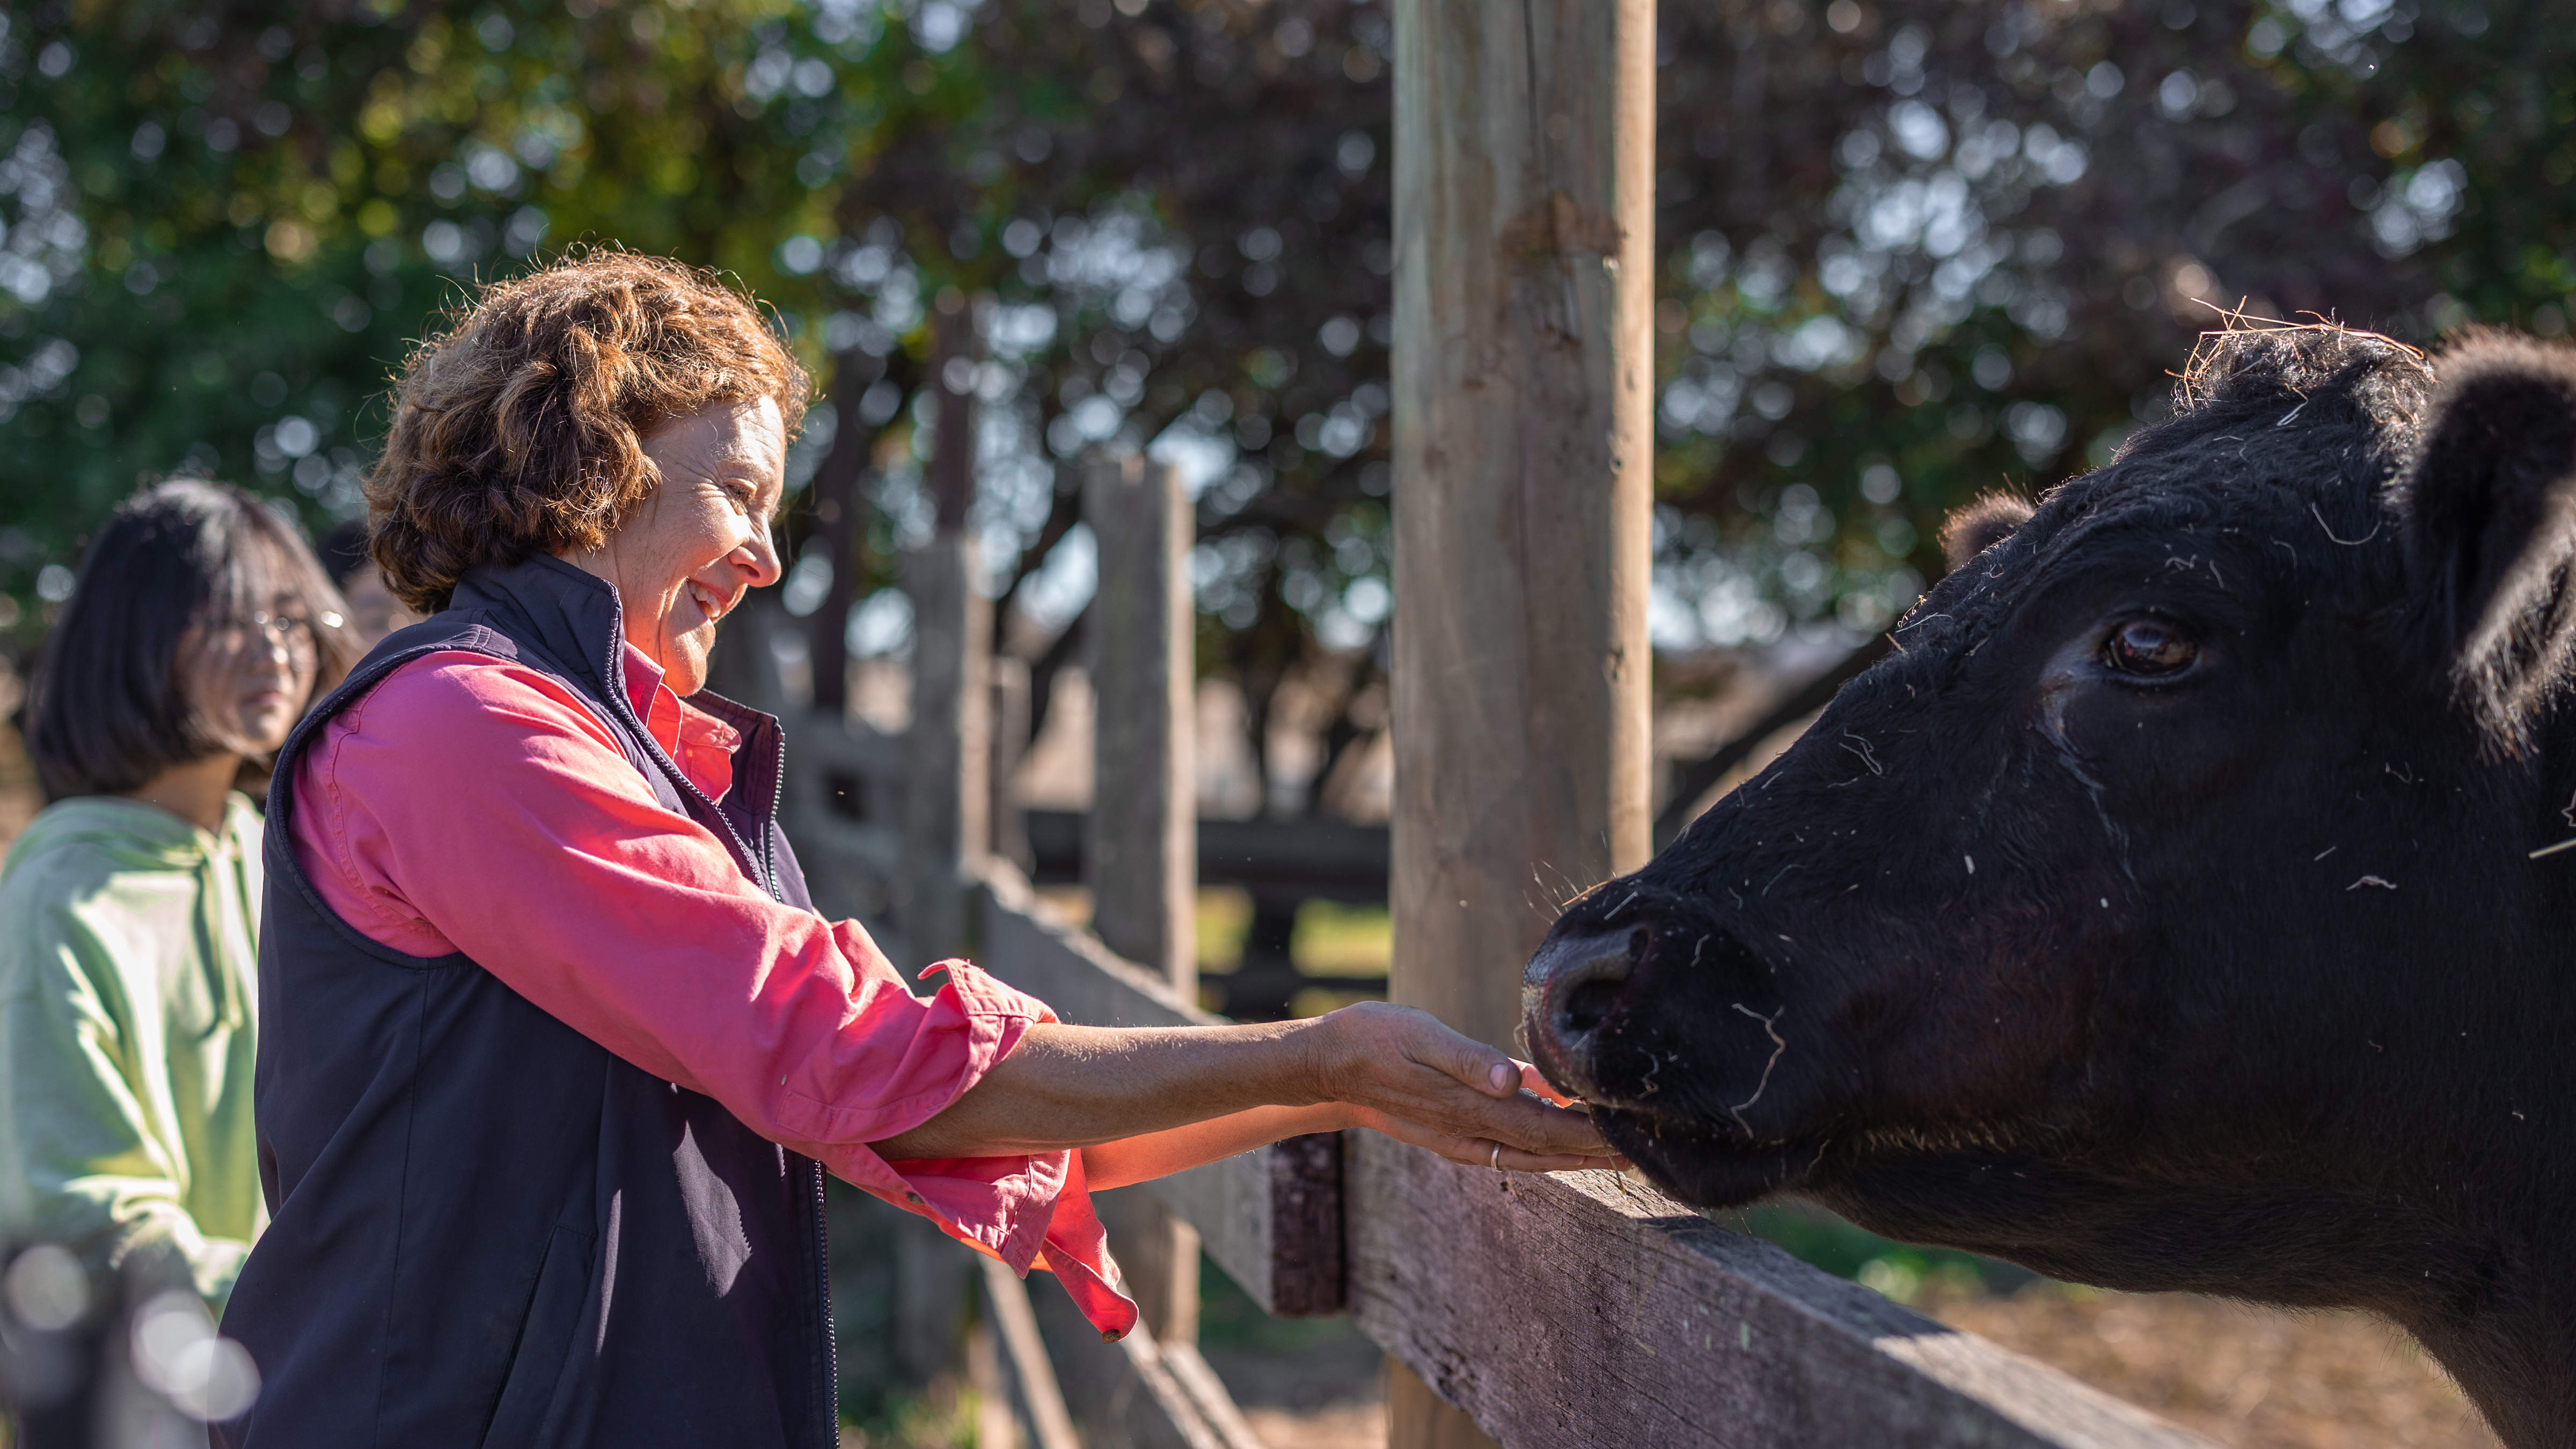 Brickendon staff member dressed in a blue jacket and pink shirt is hand feeding a large black steer. Photo: Kate von Stieglitz / Tourism Australia.